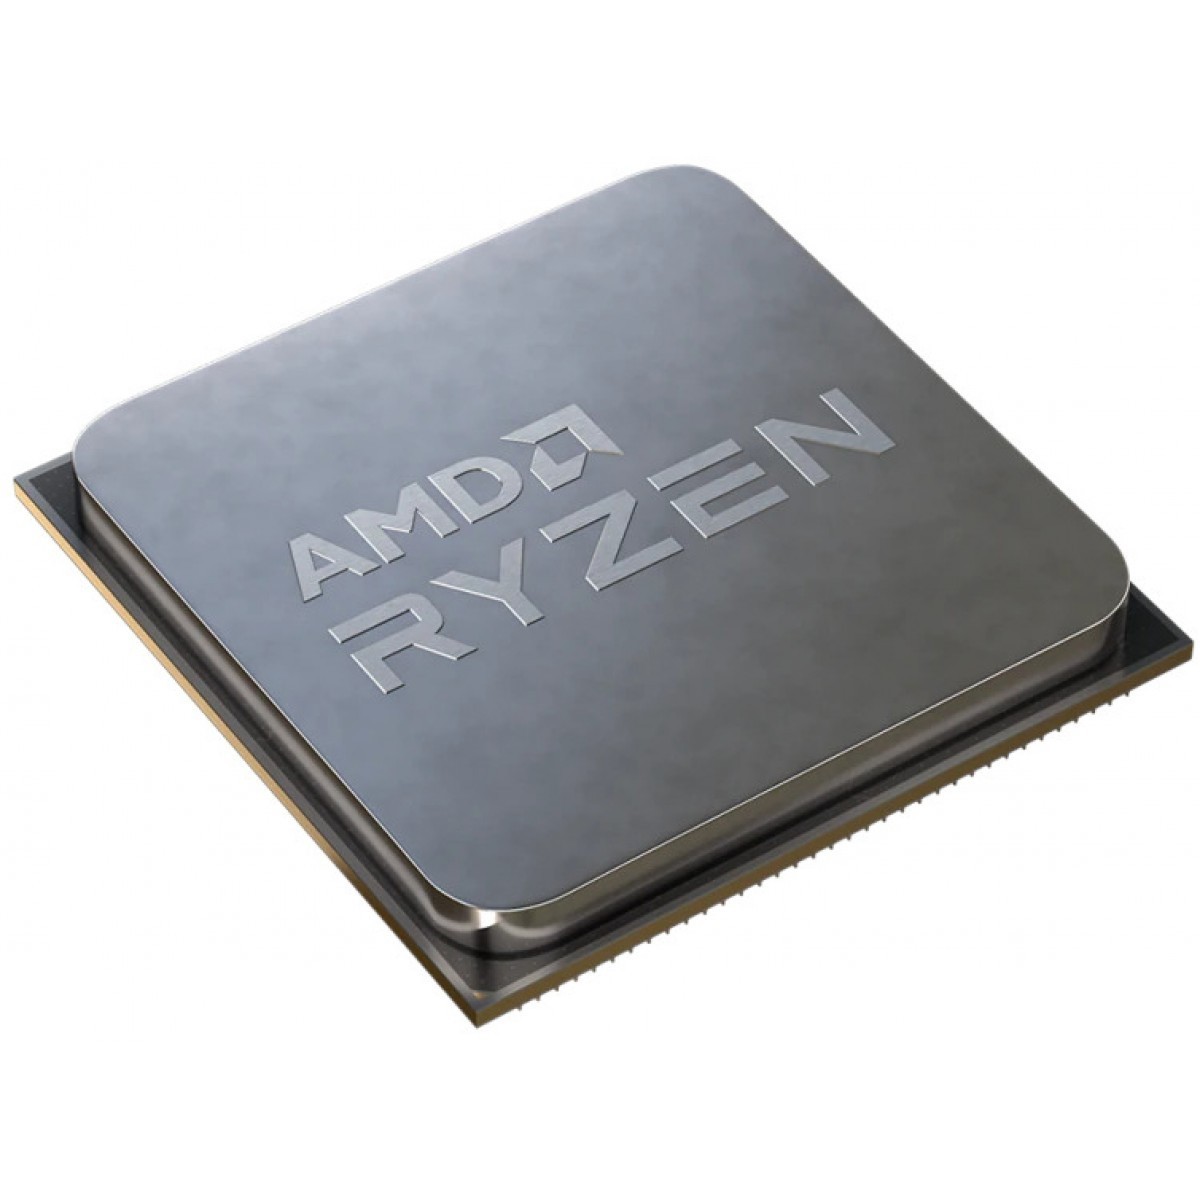 Processador AMD Ryzen 5 5500 3.6GHz (4.2GHz Turbo), 6-Cores 12-Threads, Cooler Wraith Stealth, AM4, Sem Vídeo Integrado, 100-100000457BOX